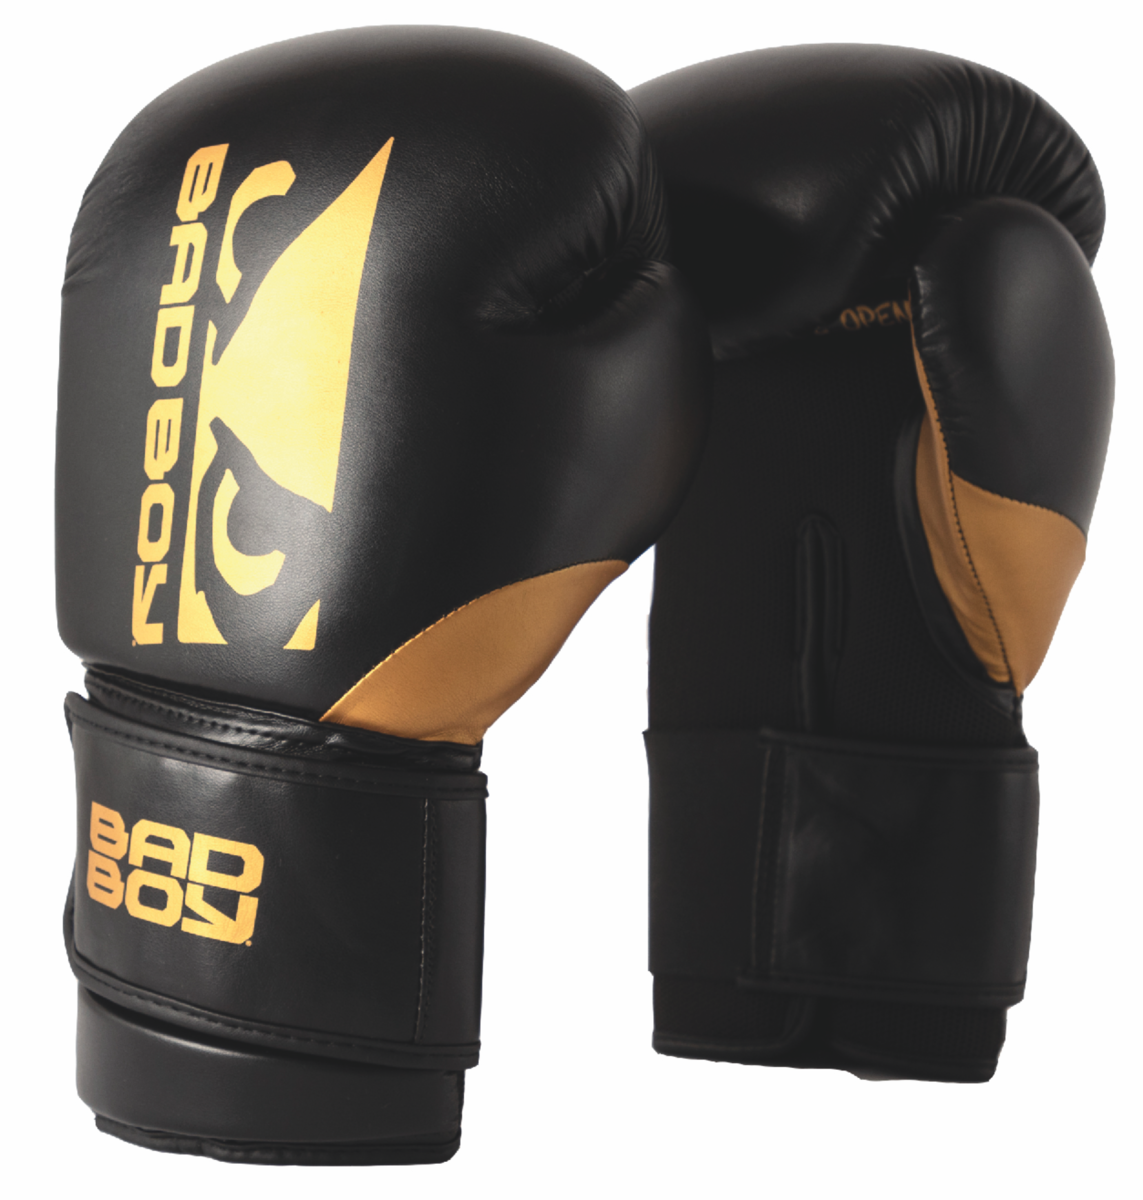 Bad Boy Zeus Matte Boxing Gloves  - Black/Gold